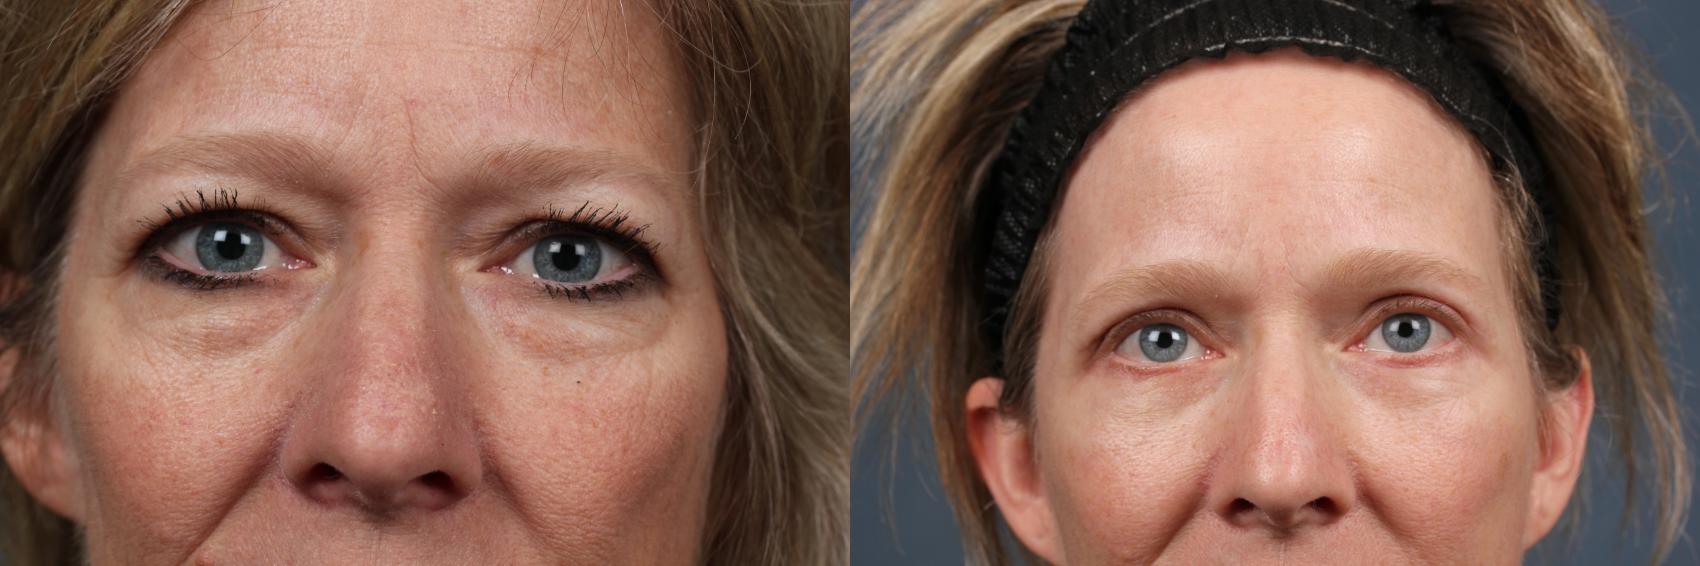 Eyelid Surgery Case 609 Before & After View #1 | Louisville, KY | CaloSpa® Rejuvenation Center